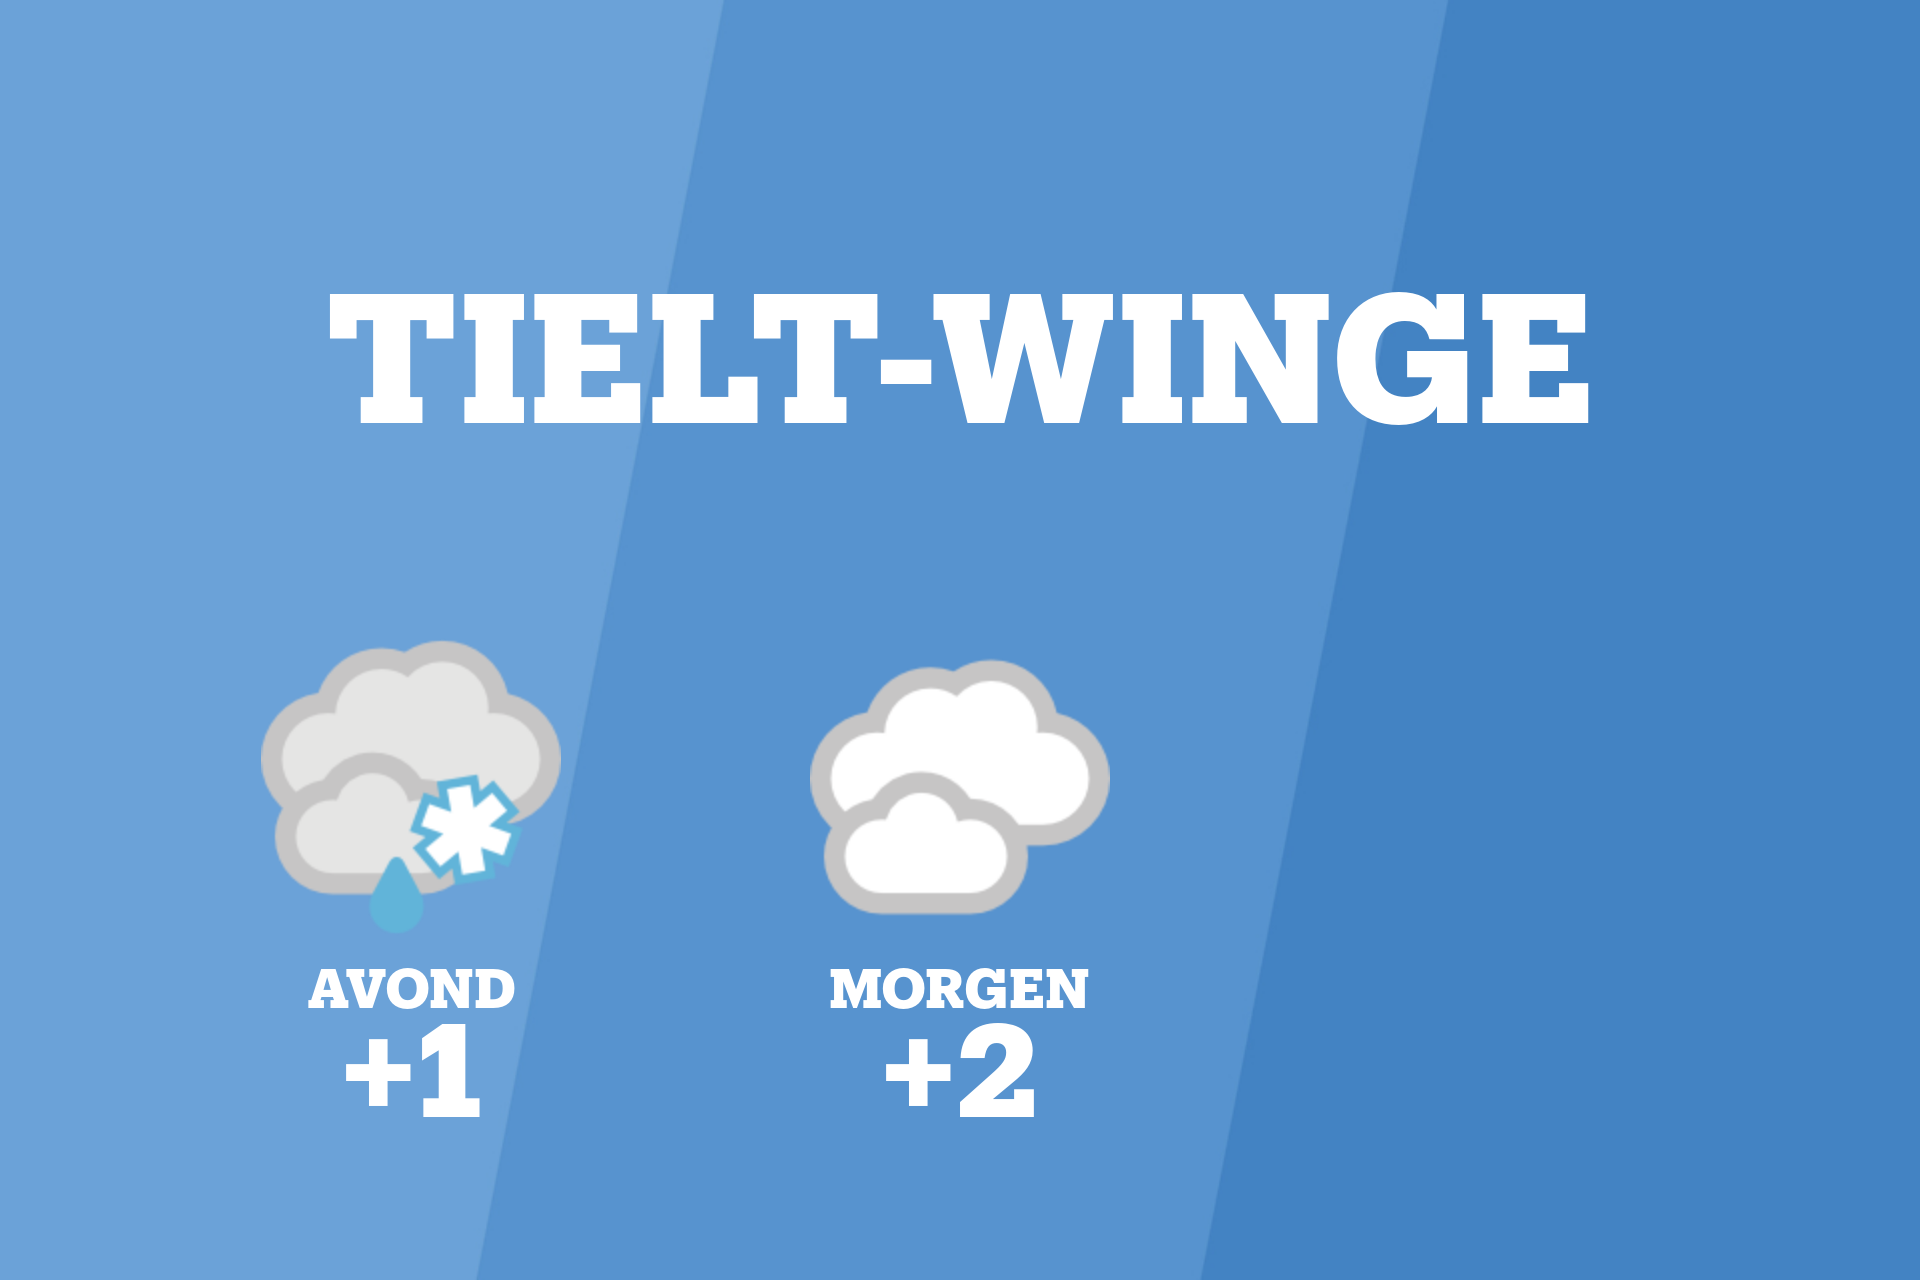 Vanavond kans op lichte smeltende regen en bewolking in Tielt-Winge